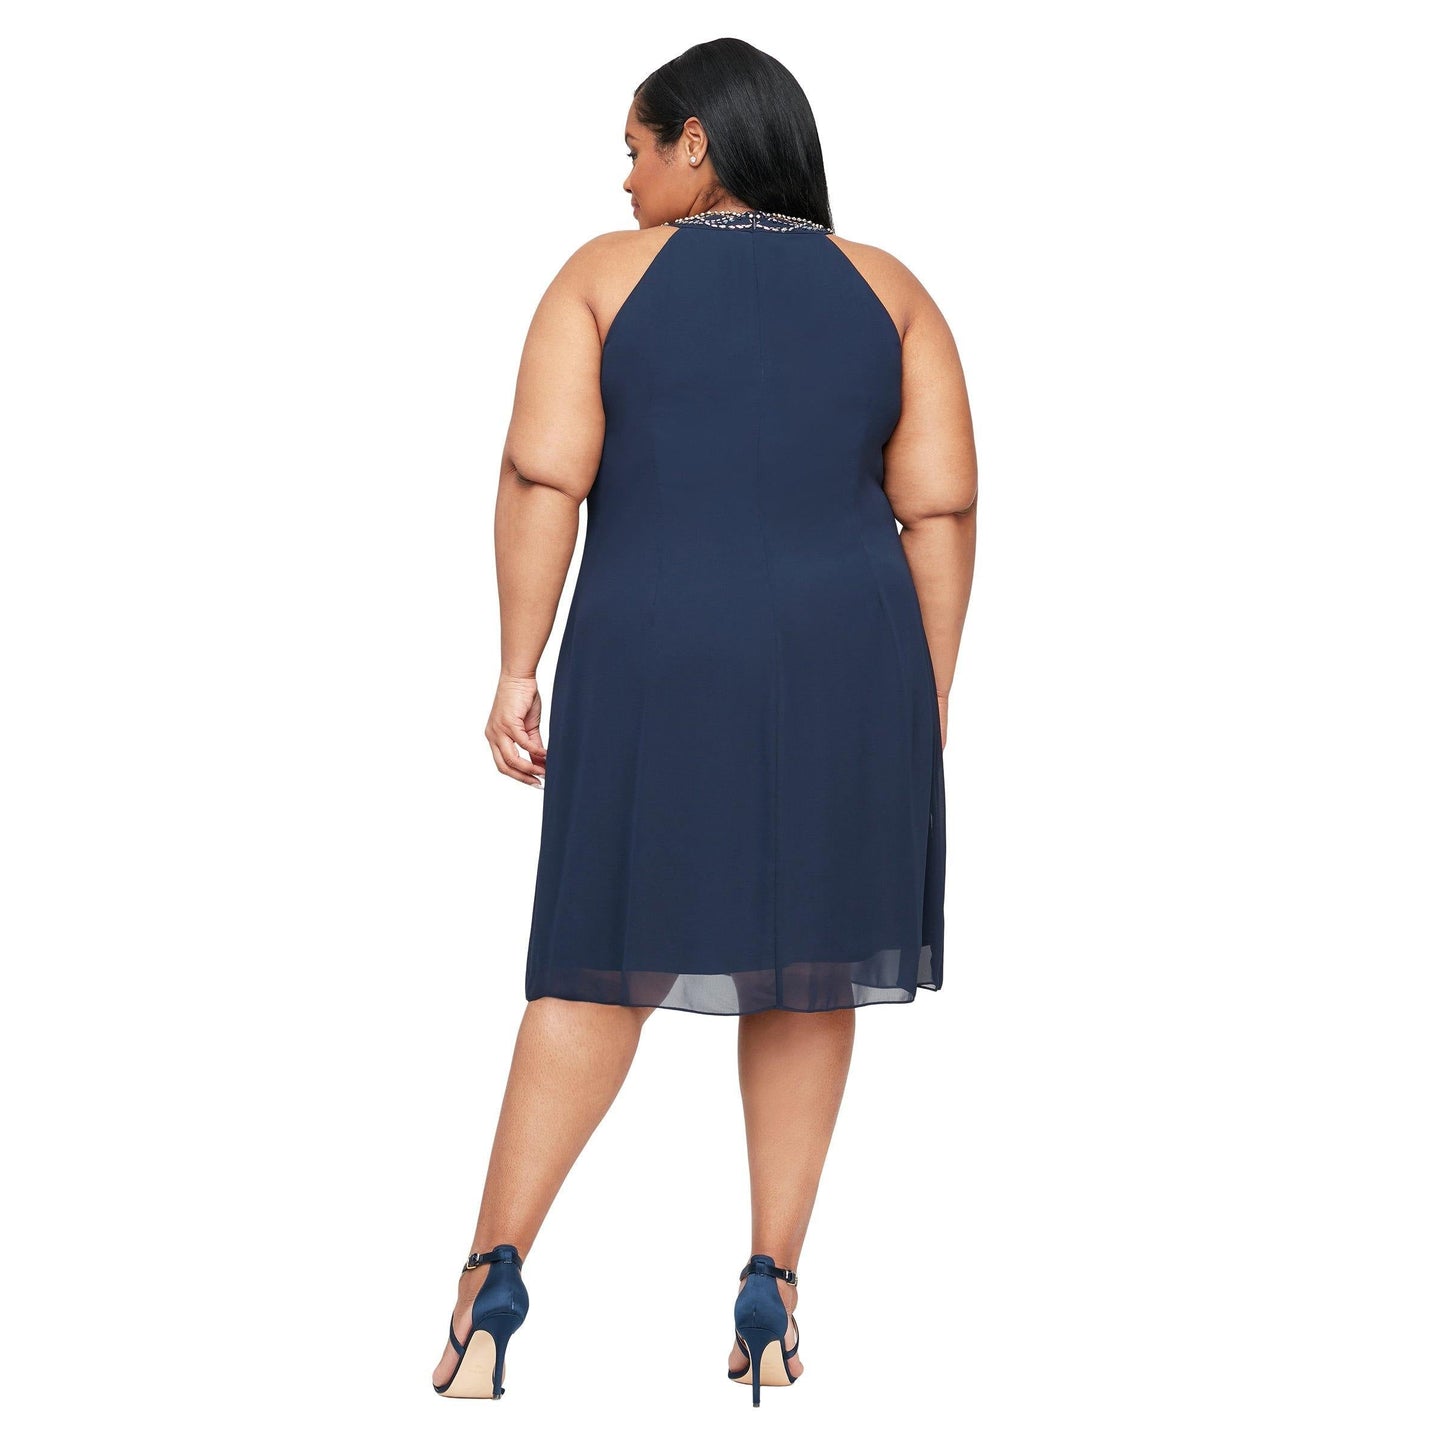 SL Fashions Short Plus Size Dress 611105 - The Dress Outlet